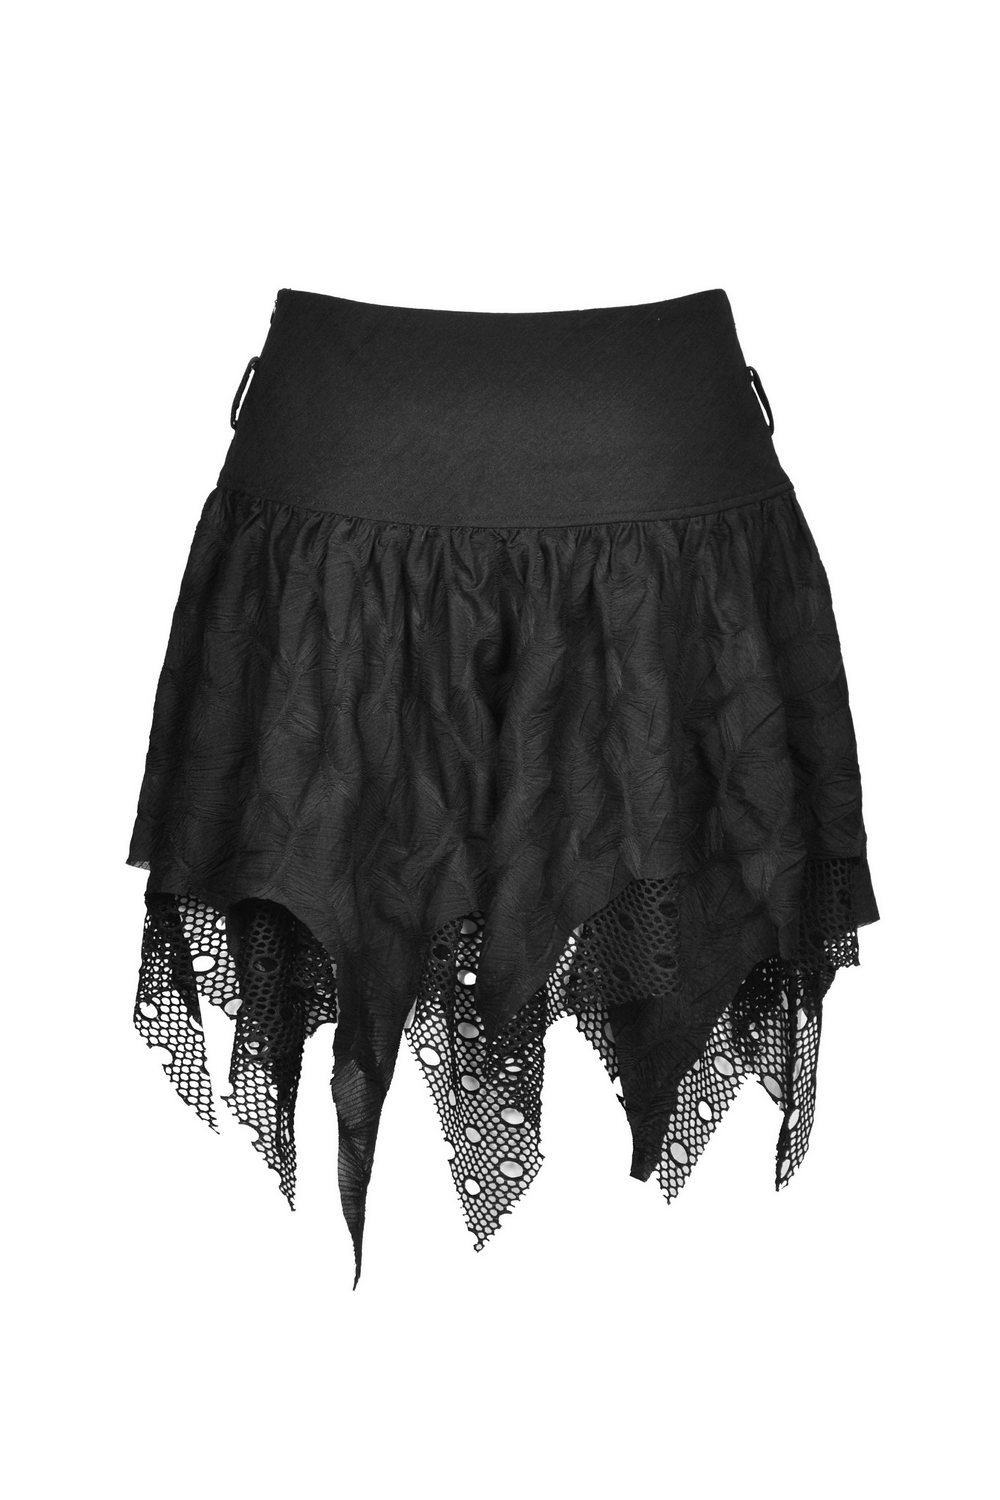 Edgy Mesh Skirt with Lace Trim and Irregular Hem